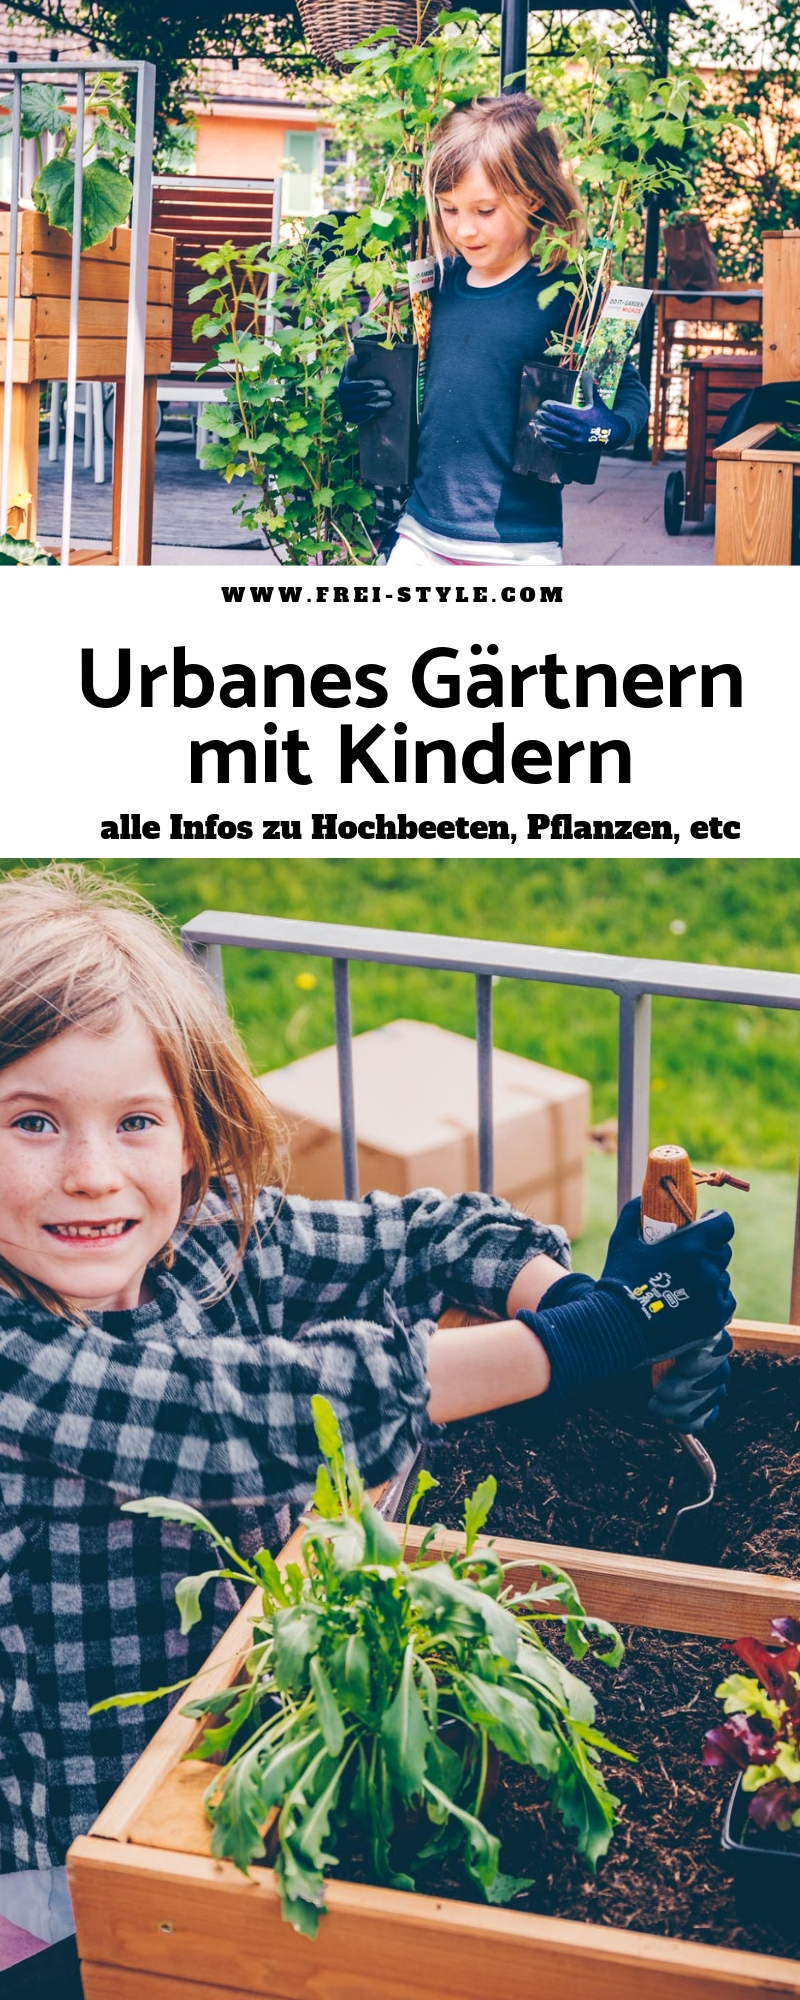 Urbanes Gärtnern mit Kinder